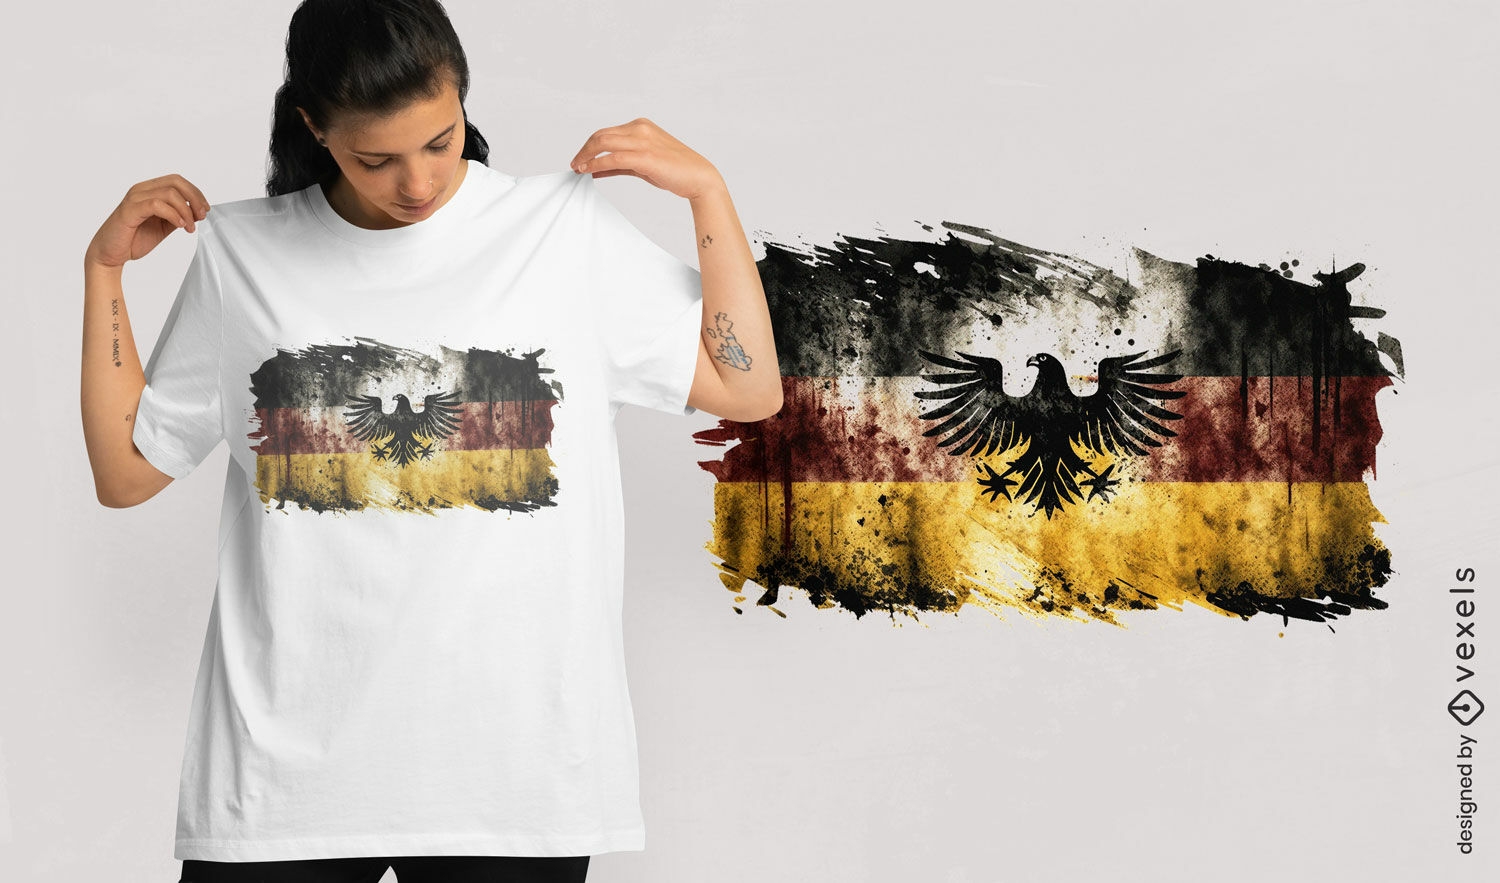 German flag and eagle t-shirt design